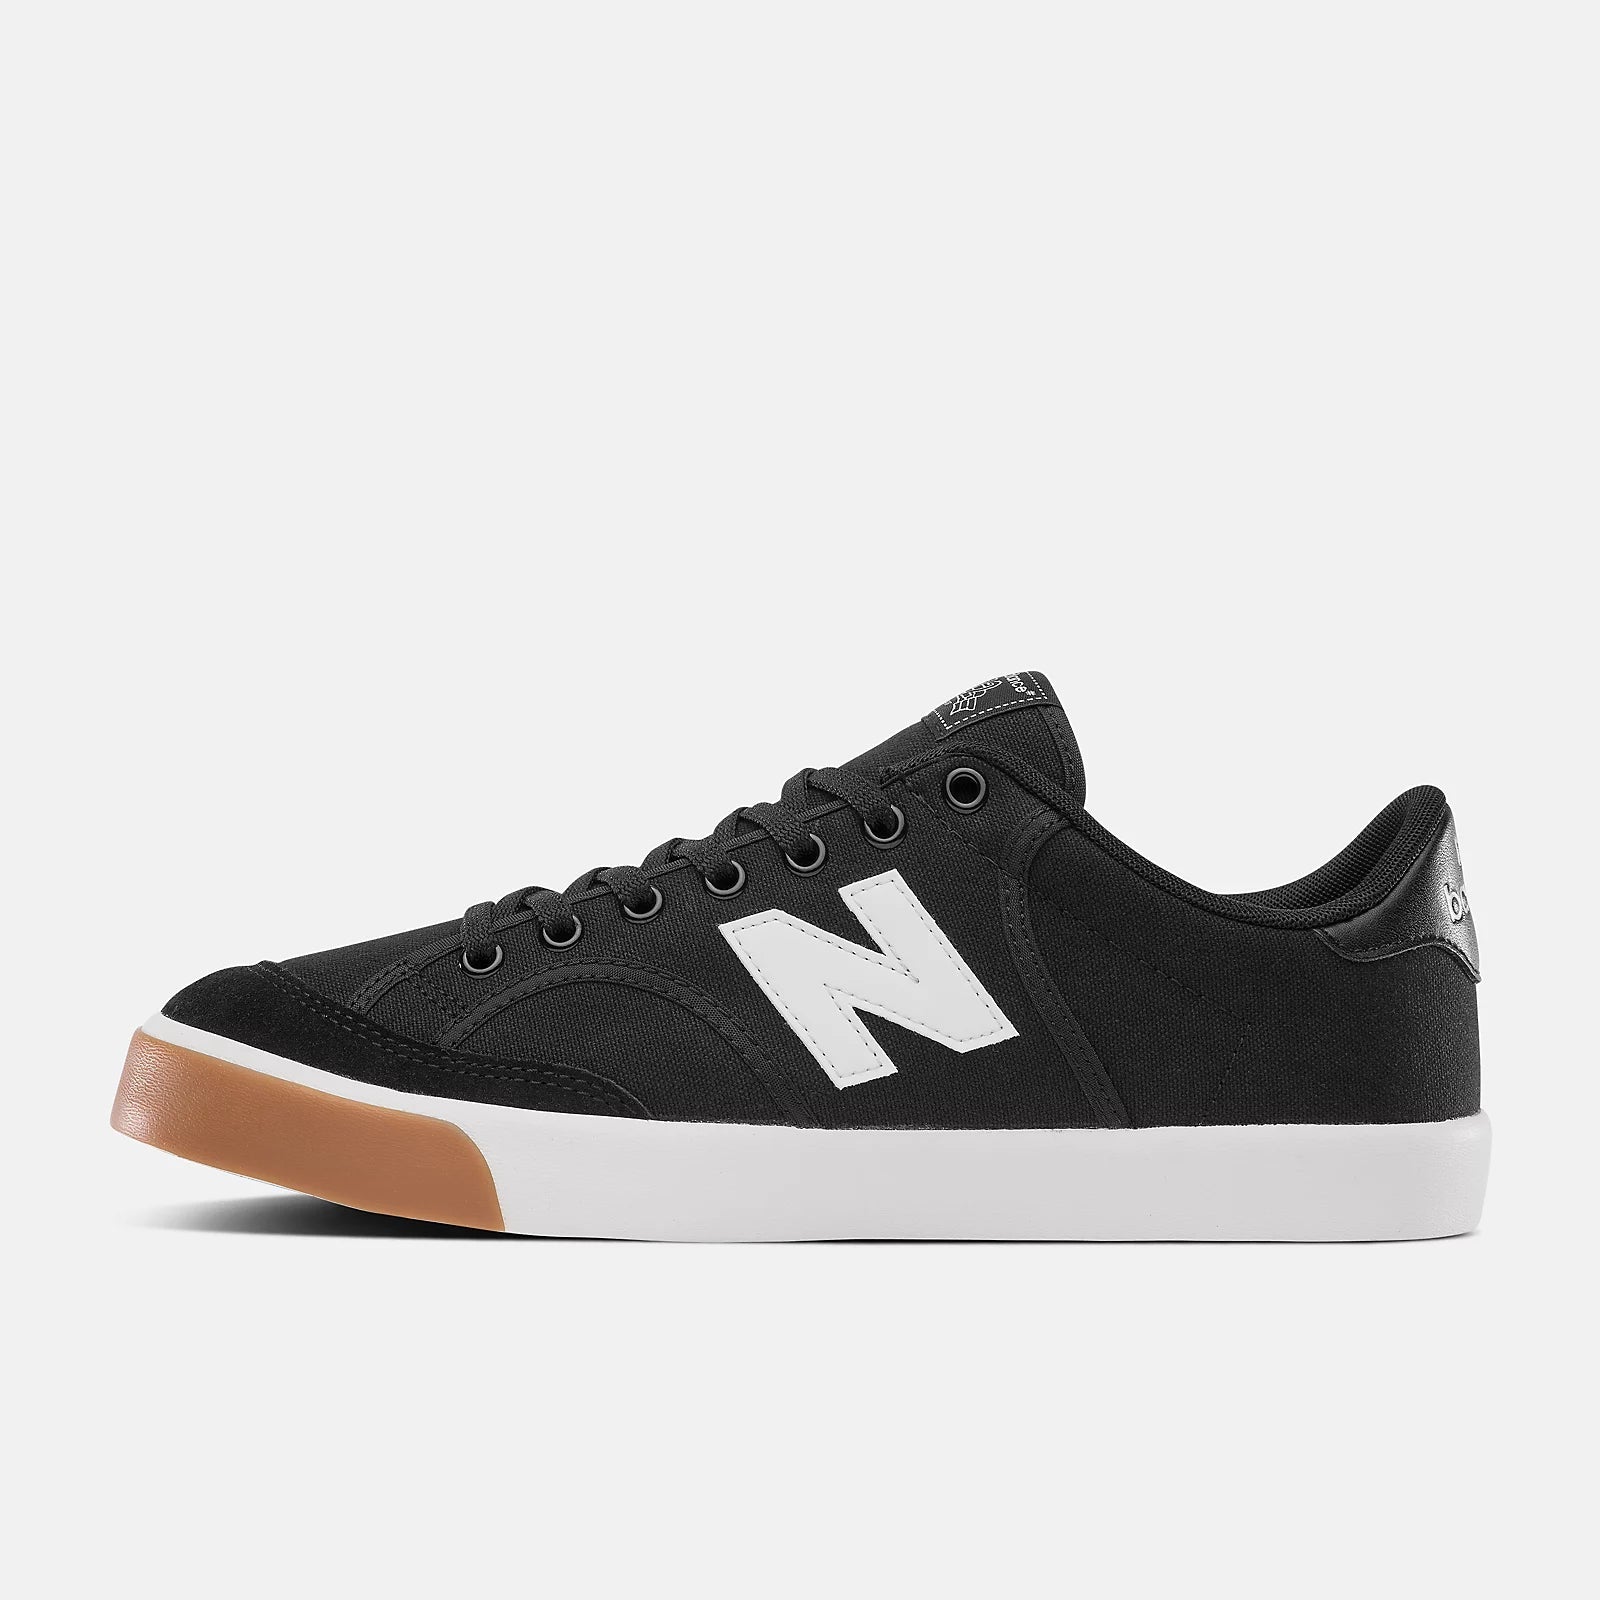 NB NUMERIC 212 Pro Court Shoes Black/White Men's Skate Shoes New Balance 